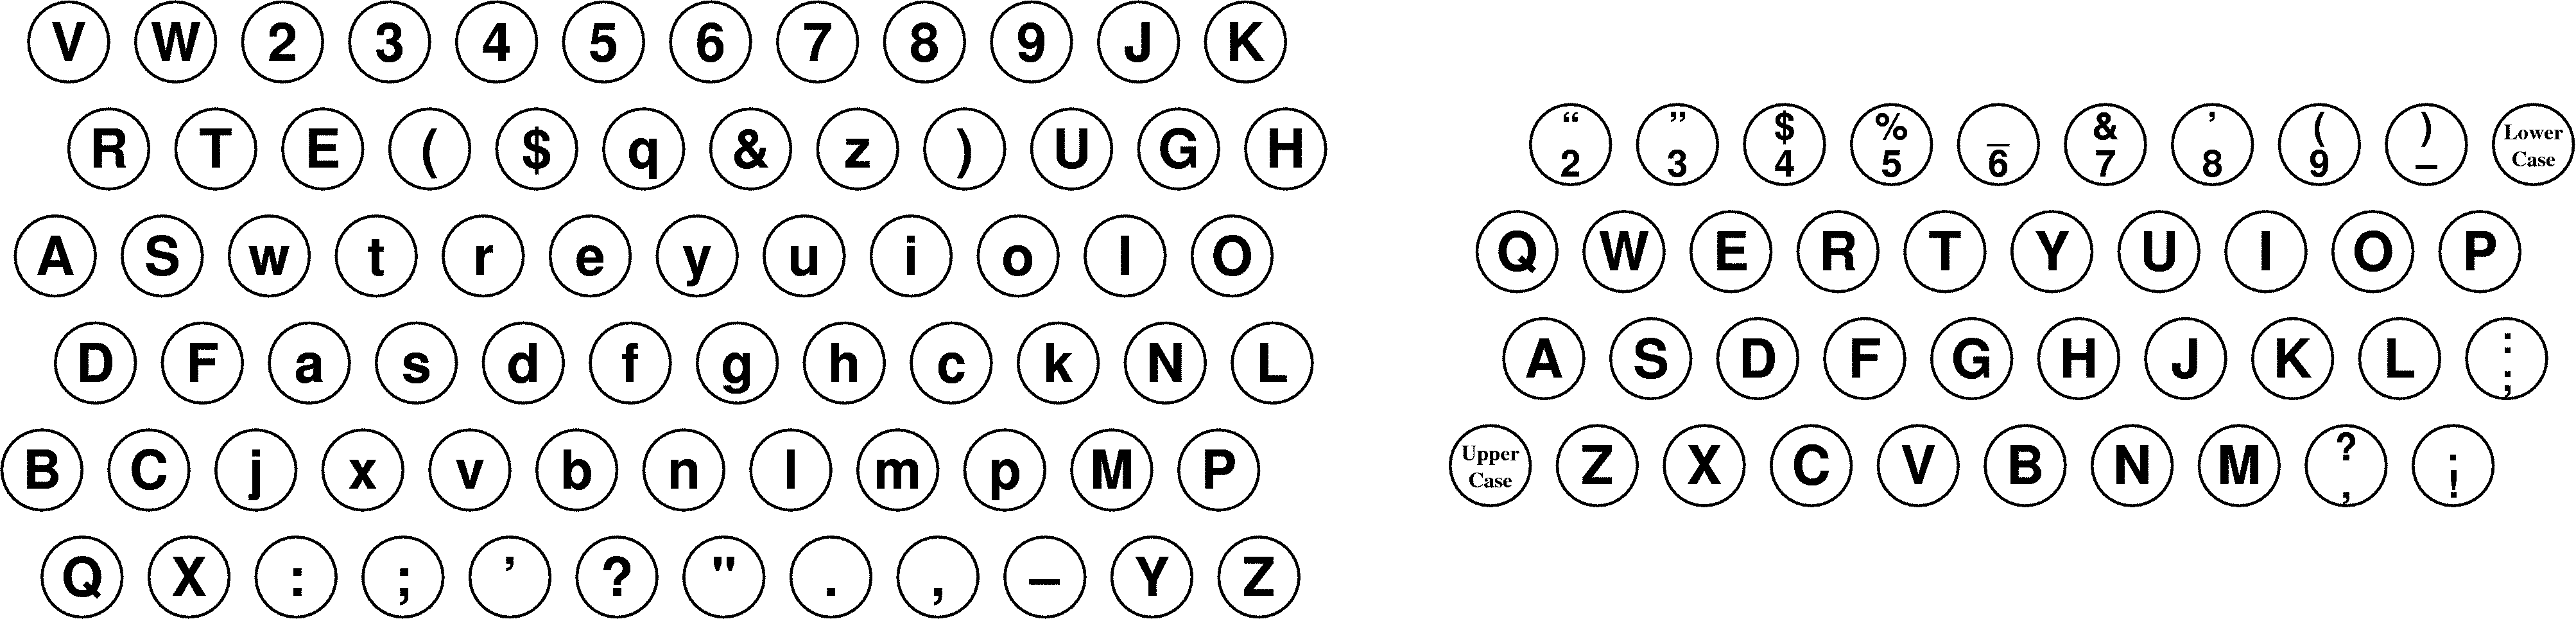 「Caligraph No.2」のキー配列（左）と「Remington Standard Type-Writer No.2」のキー配列（右）